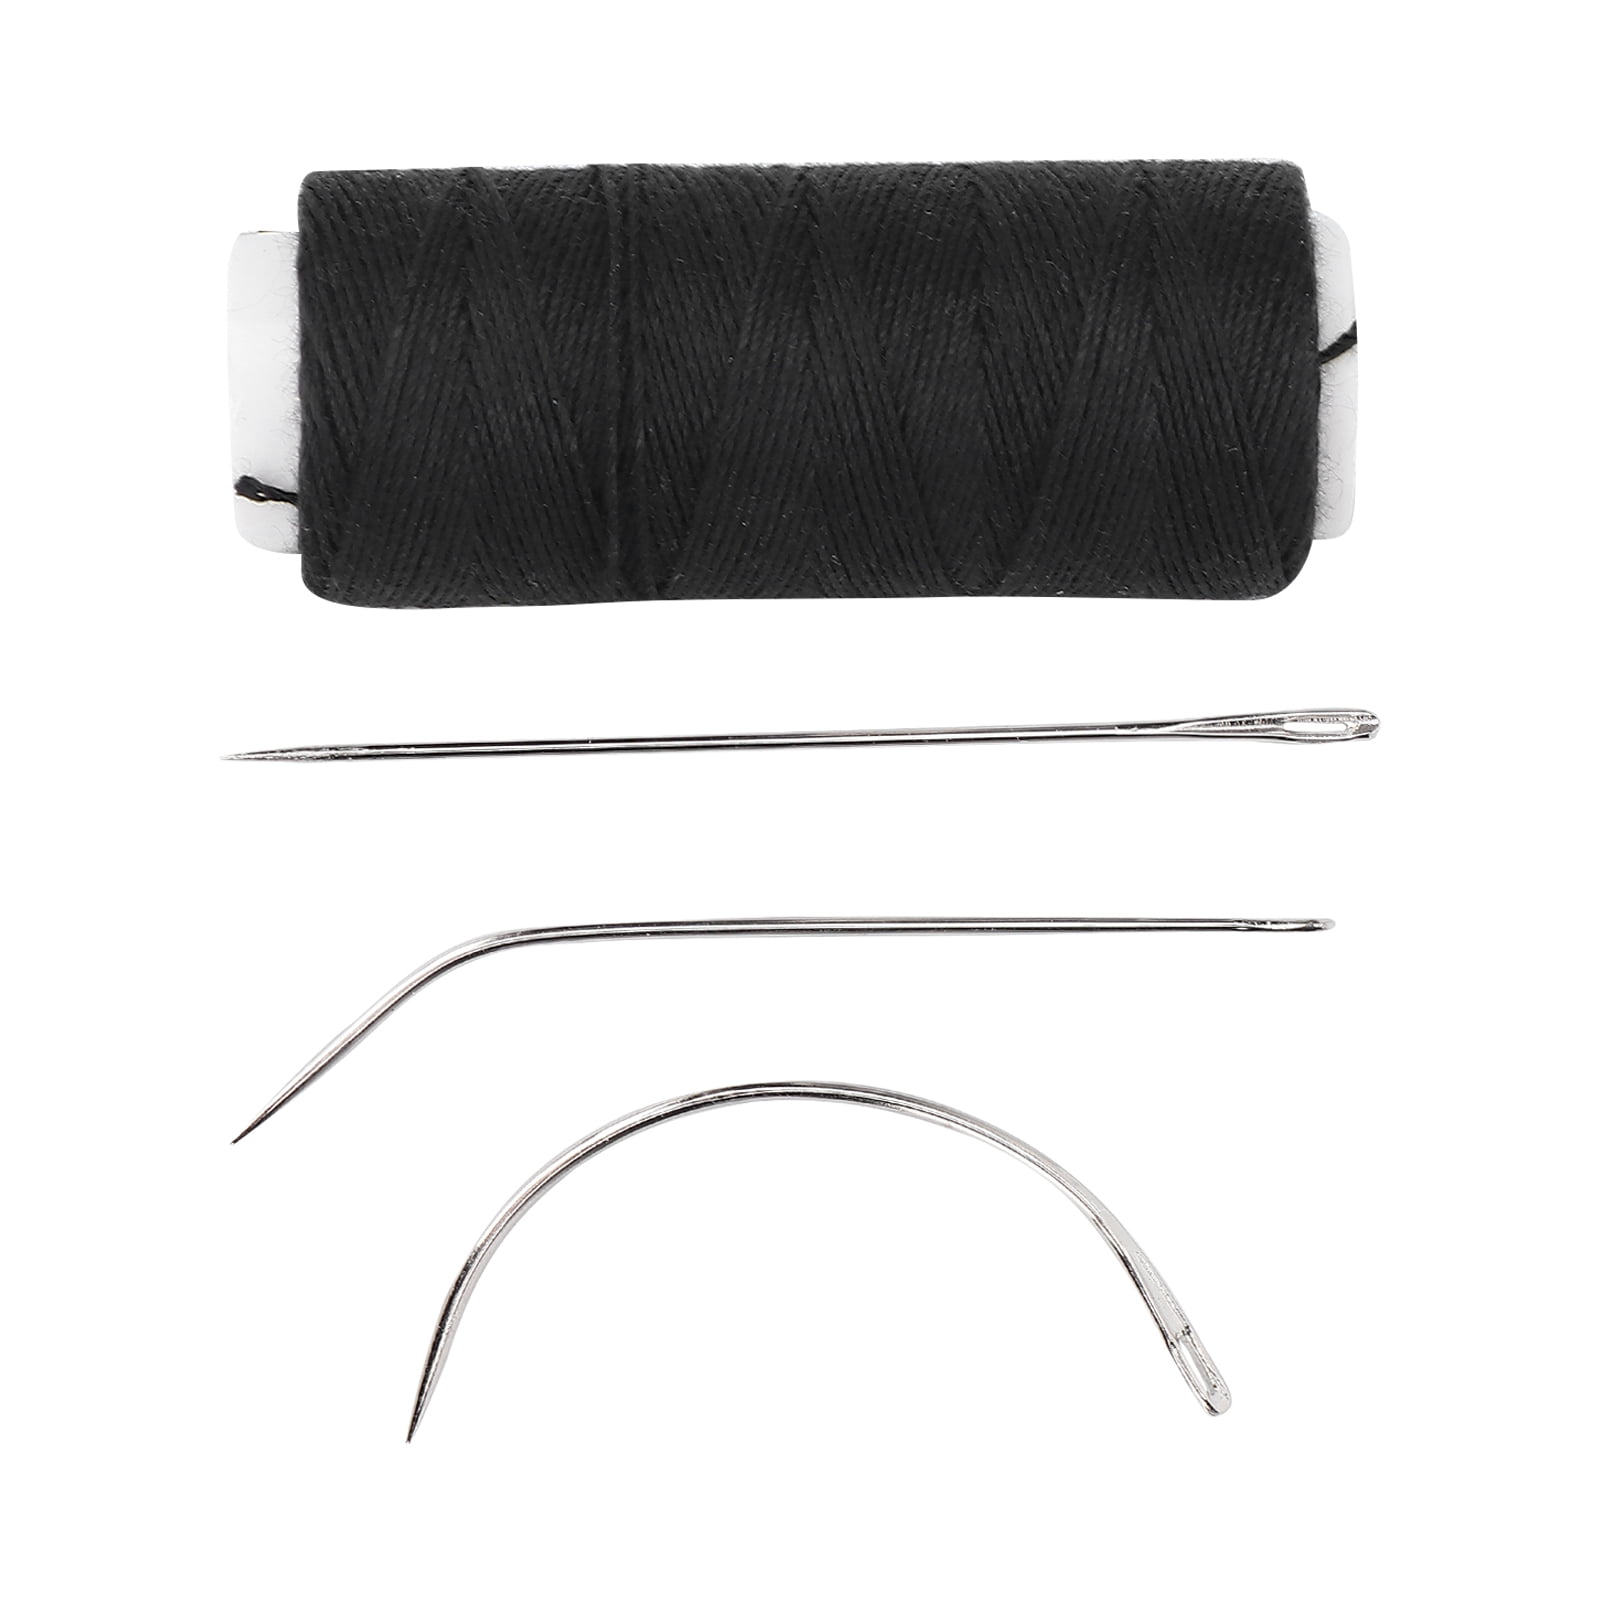 Hair Needle, Durable Hair Thread And Needle Comfortable Grasp For